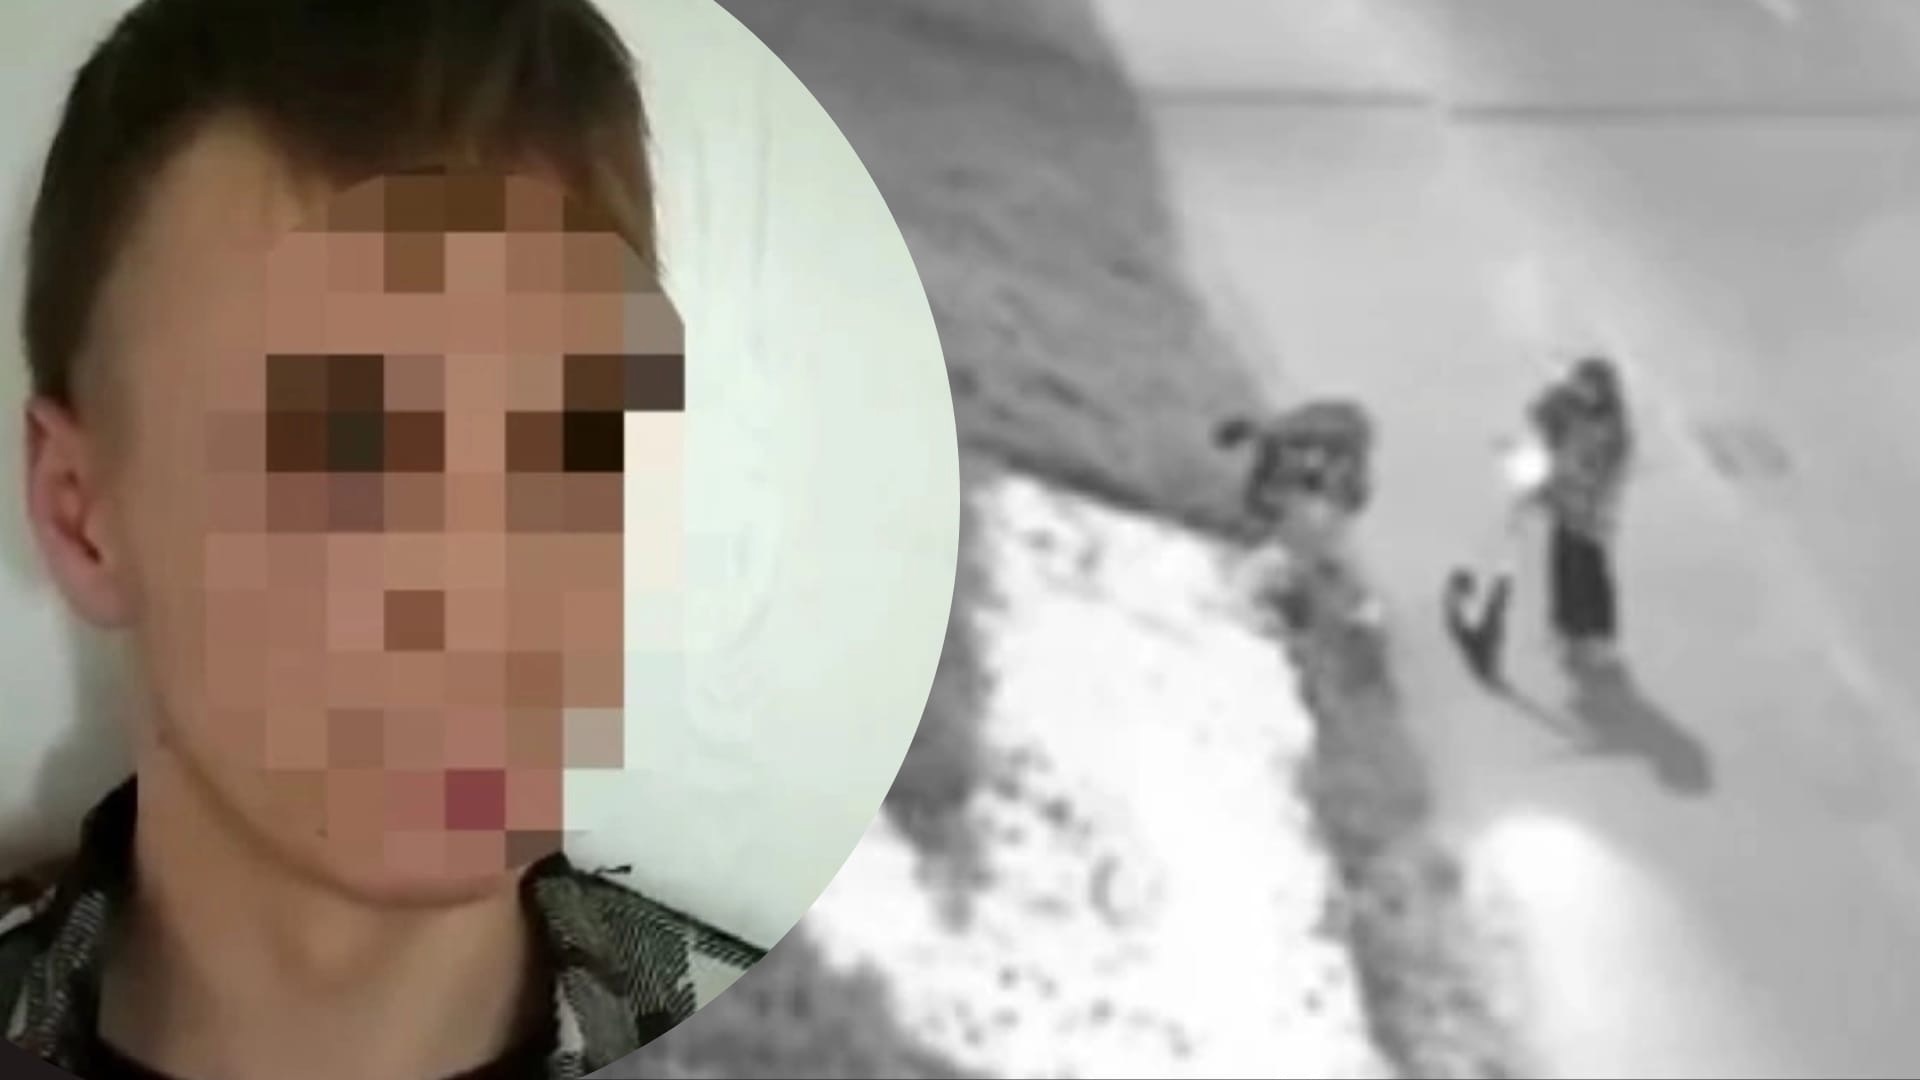  В Ярославле ФСБ и полиция взяли парня, поглумившегося над знаком Z